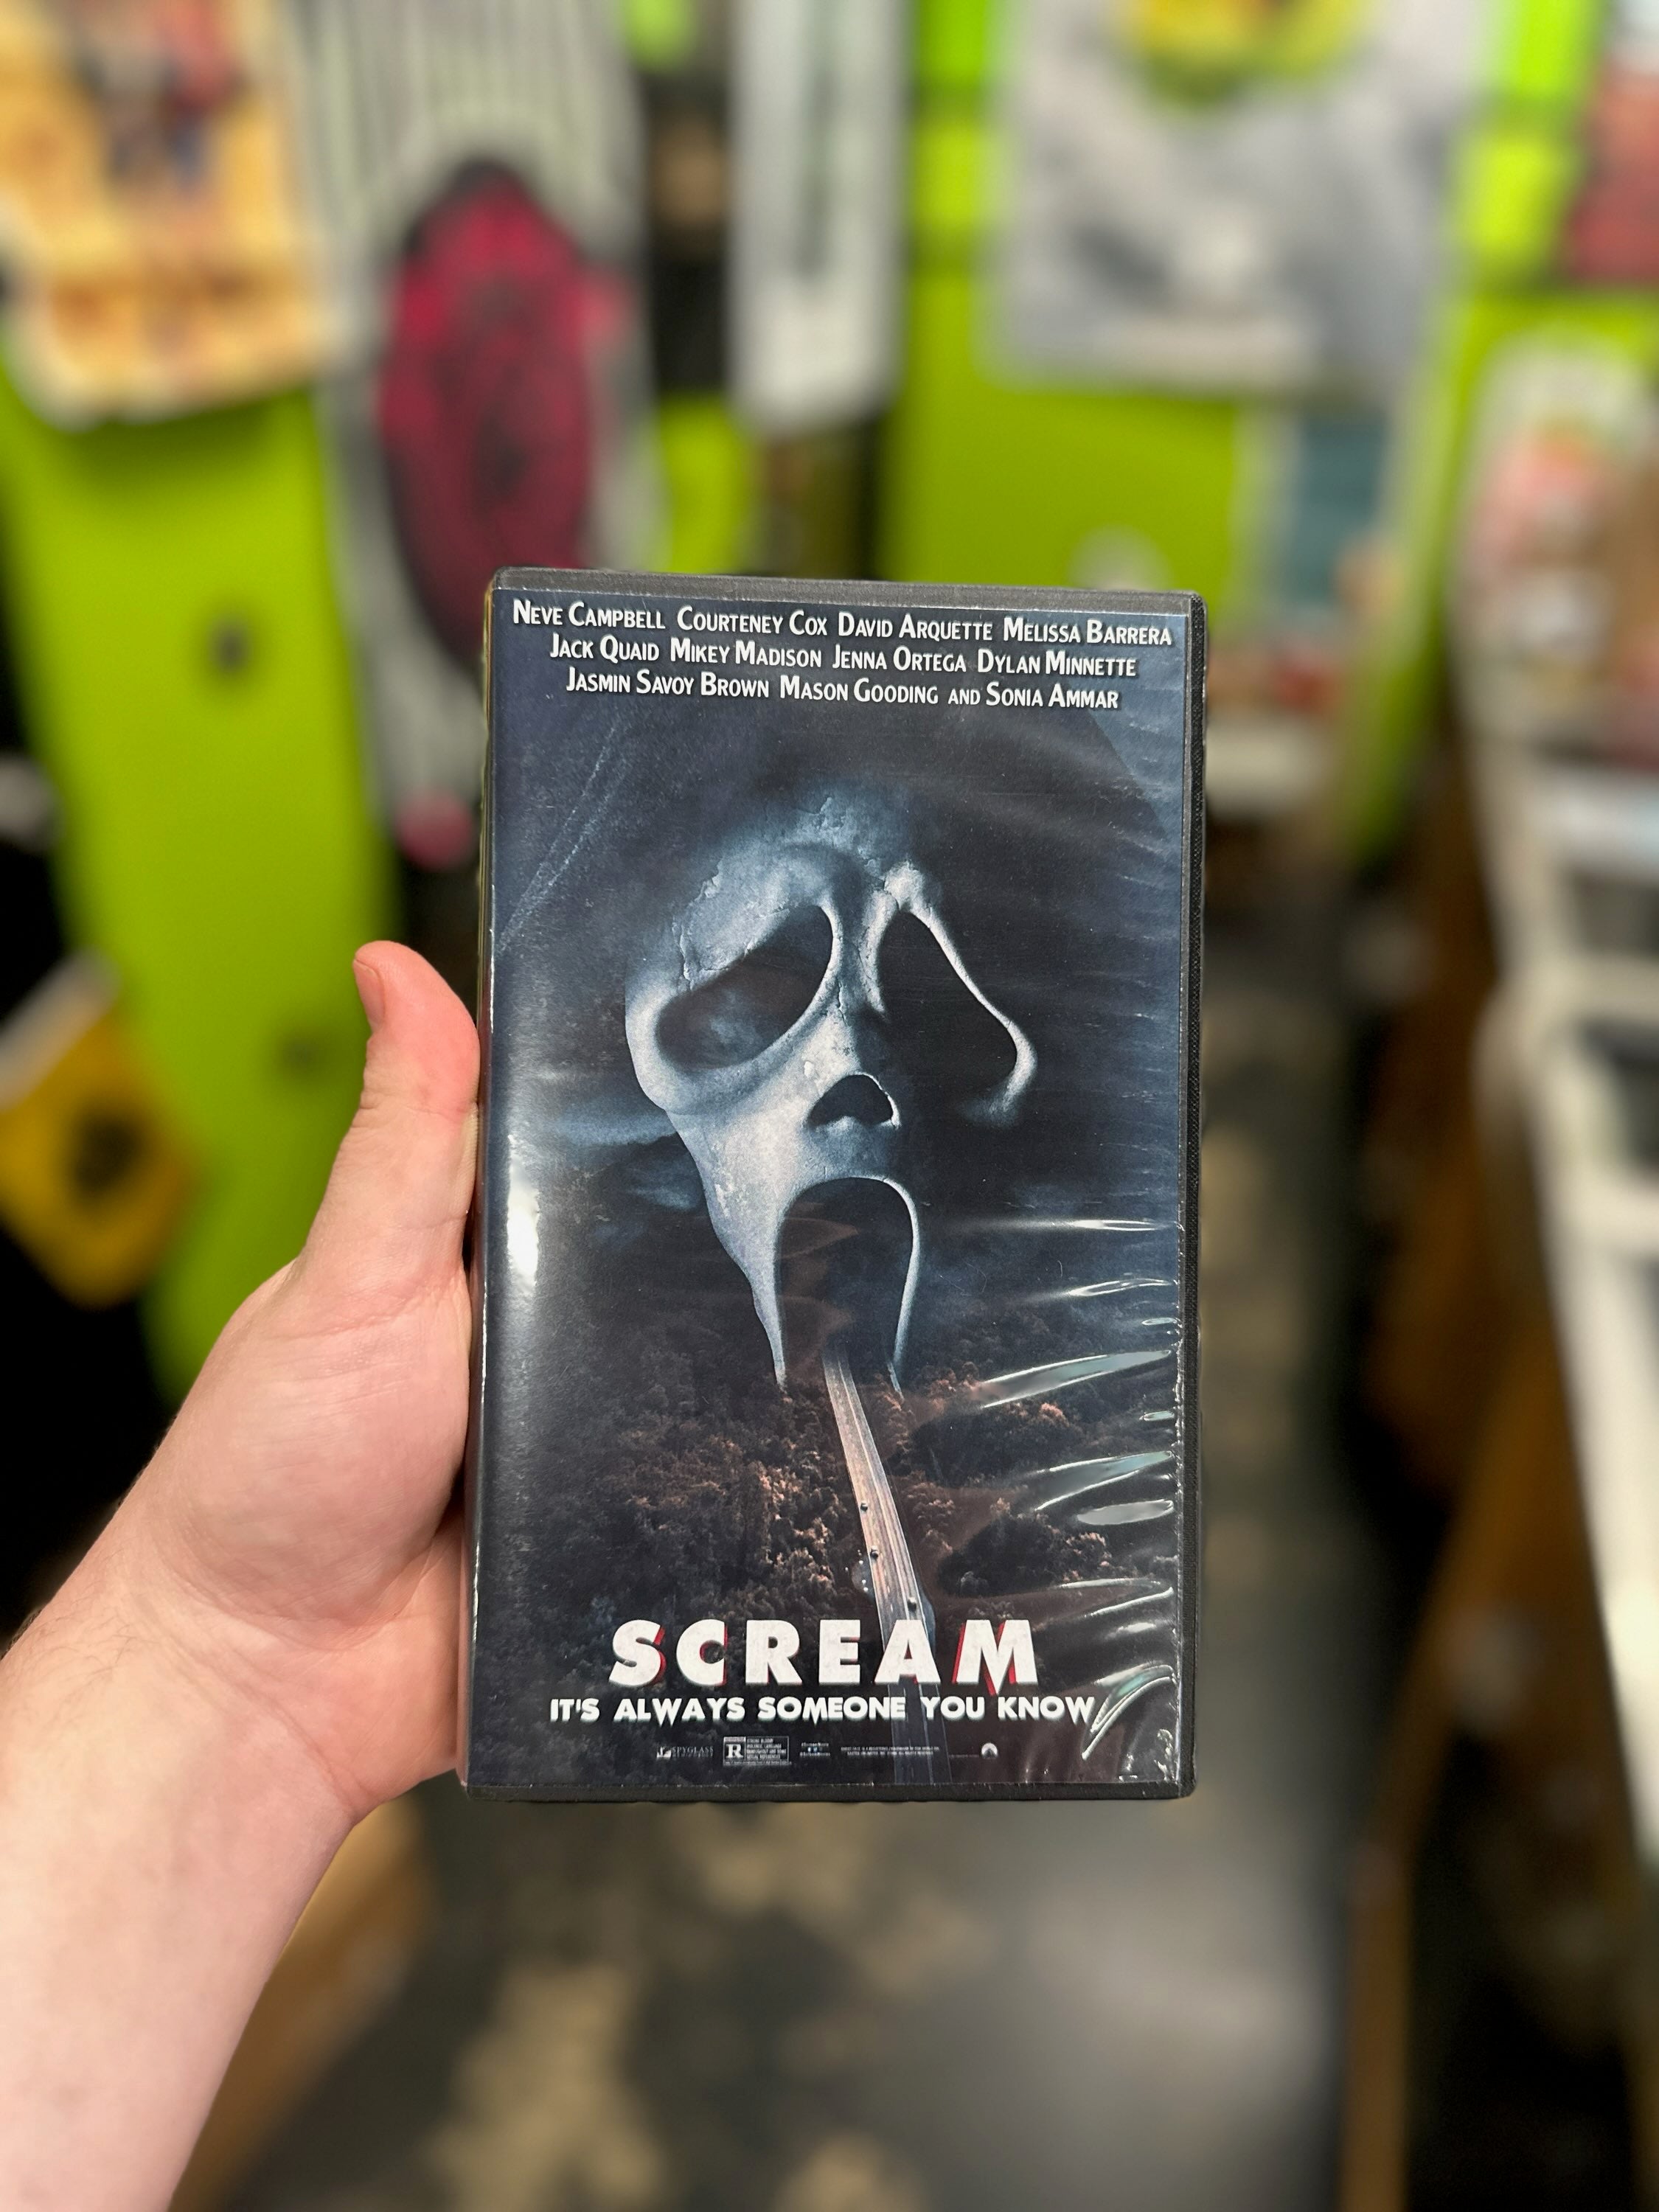 Scream V (Bloodsplatter VHS)(Brainbuster Video) - Darkside Records